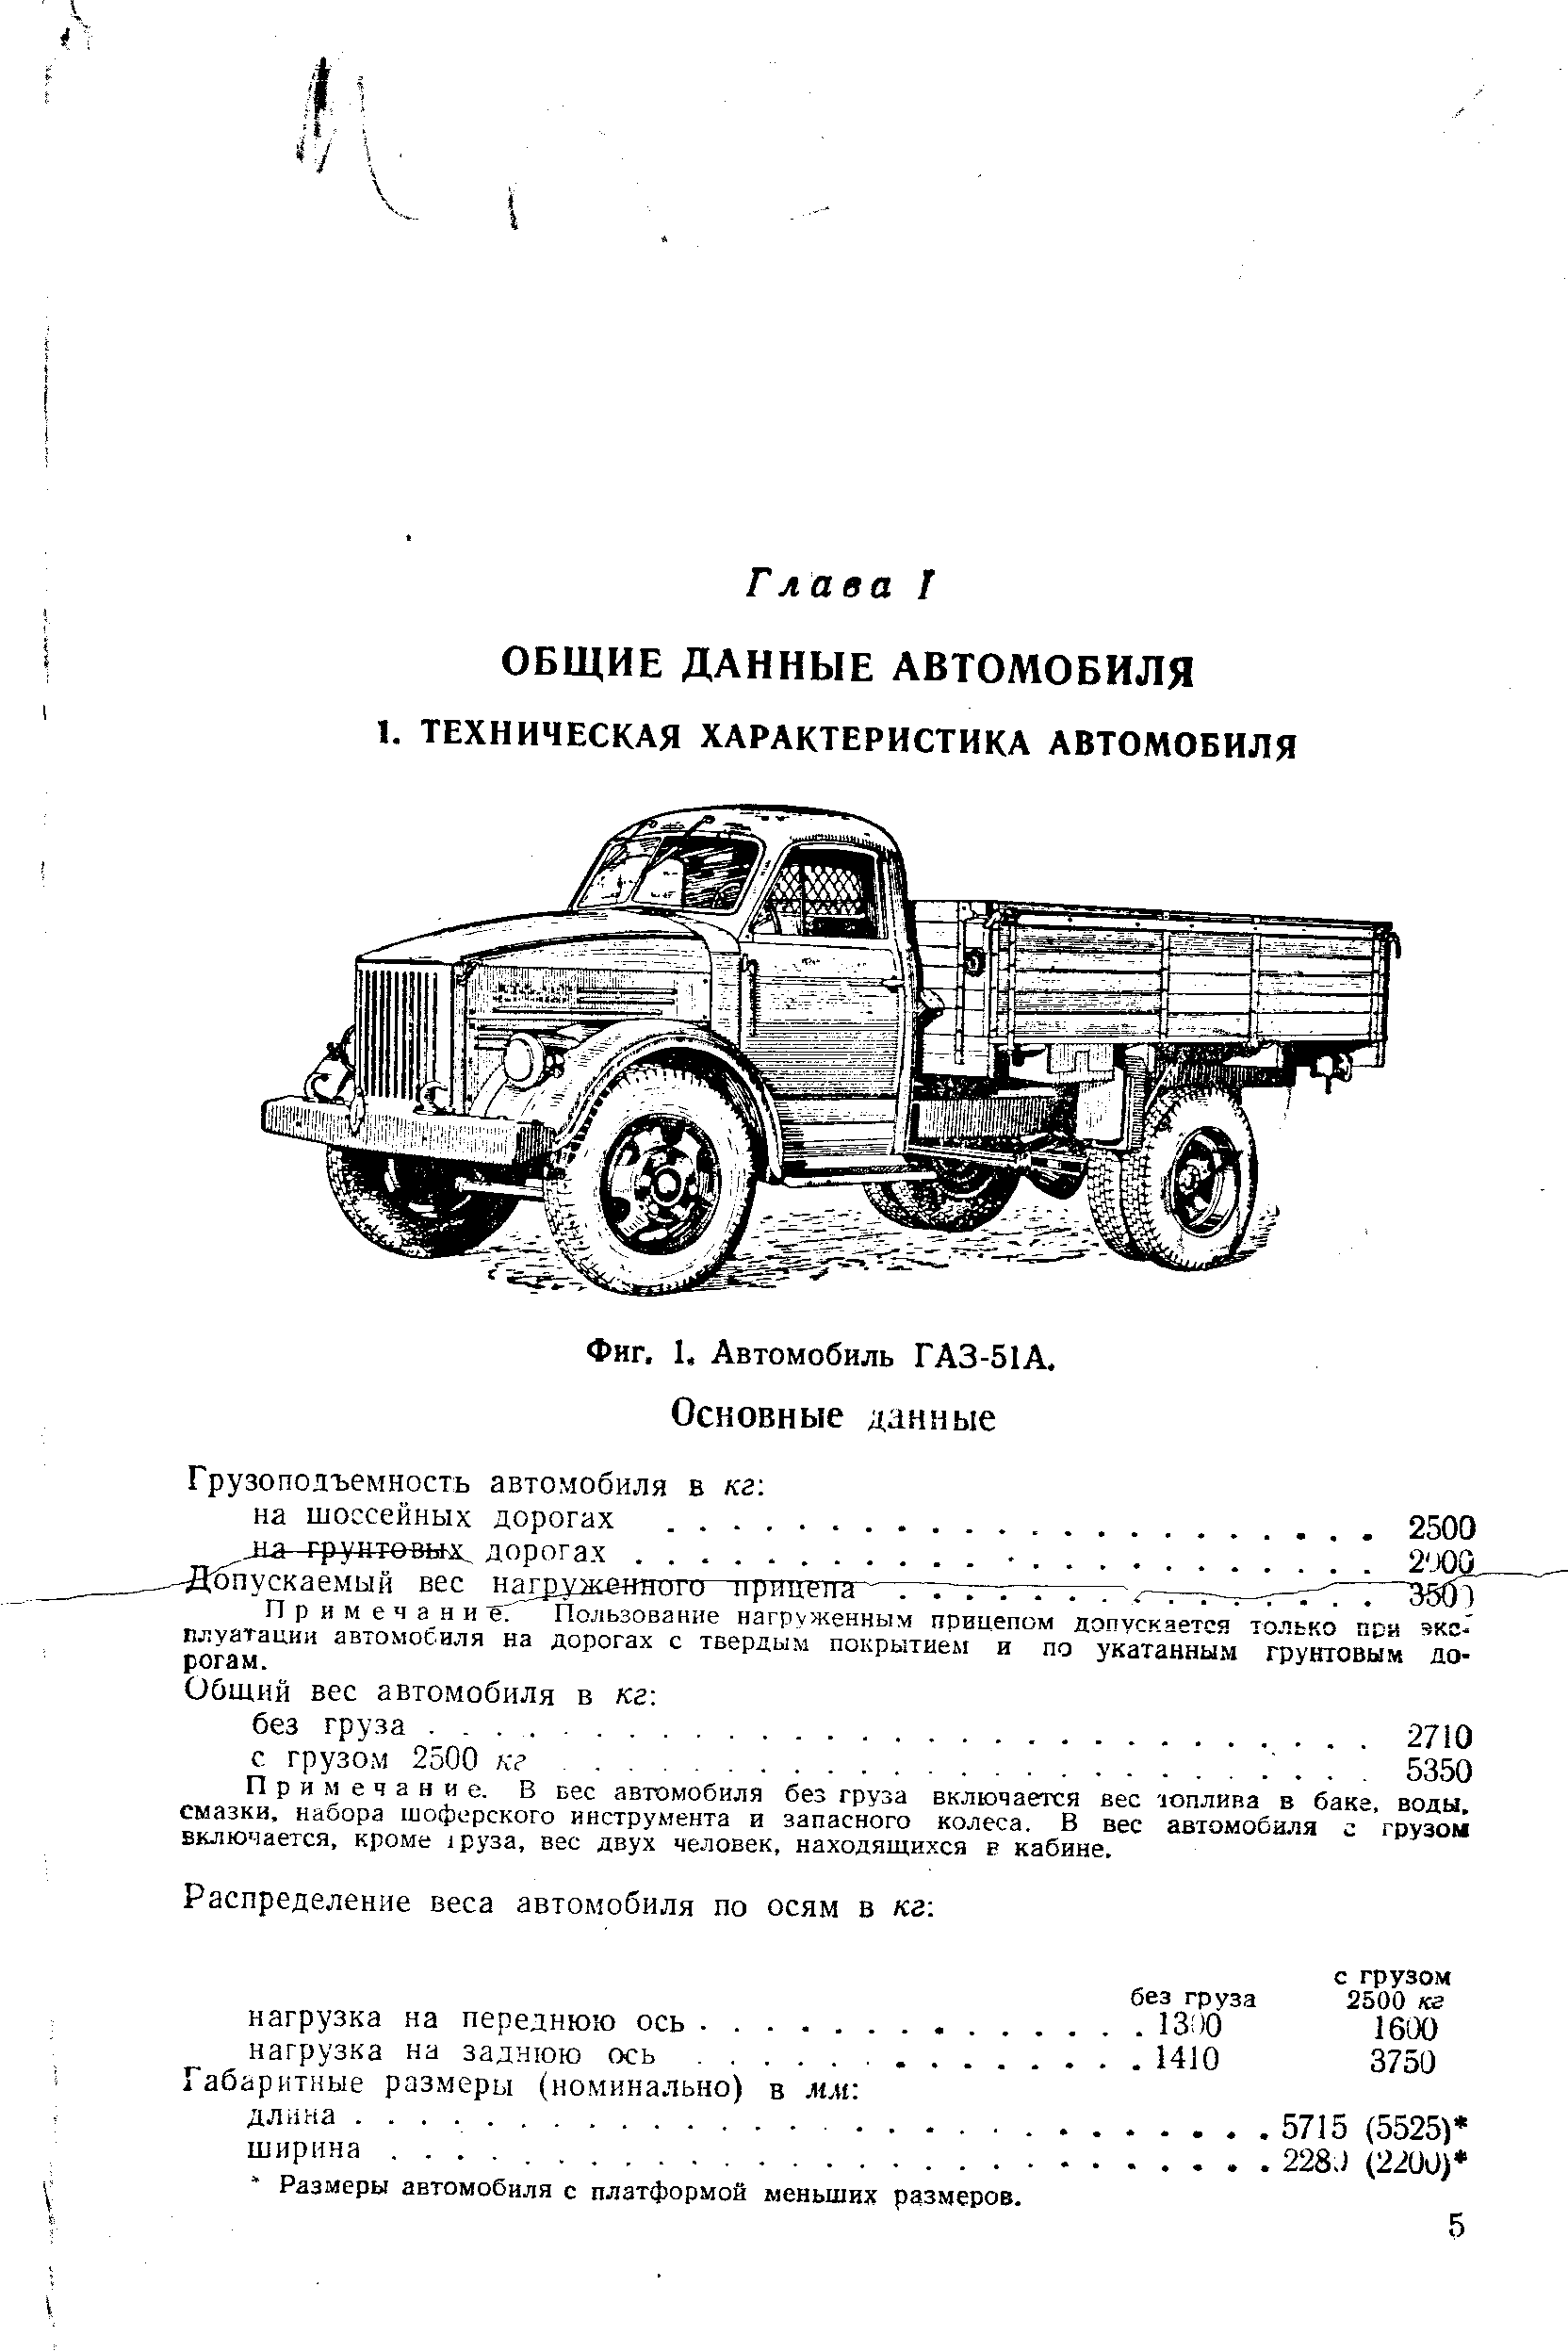 Автомобиль ГАЗ-51 А.
